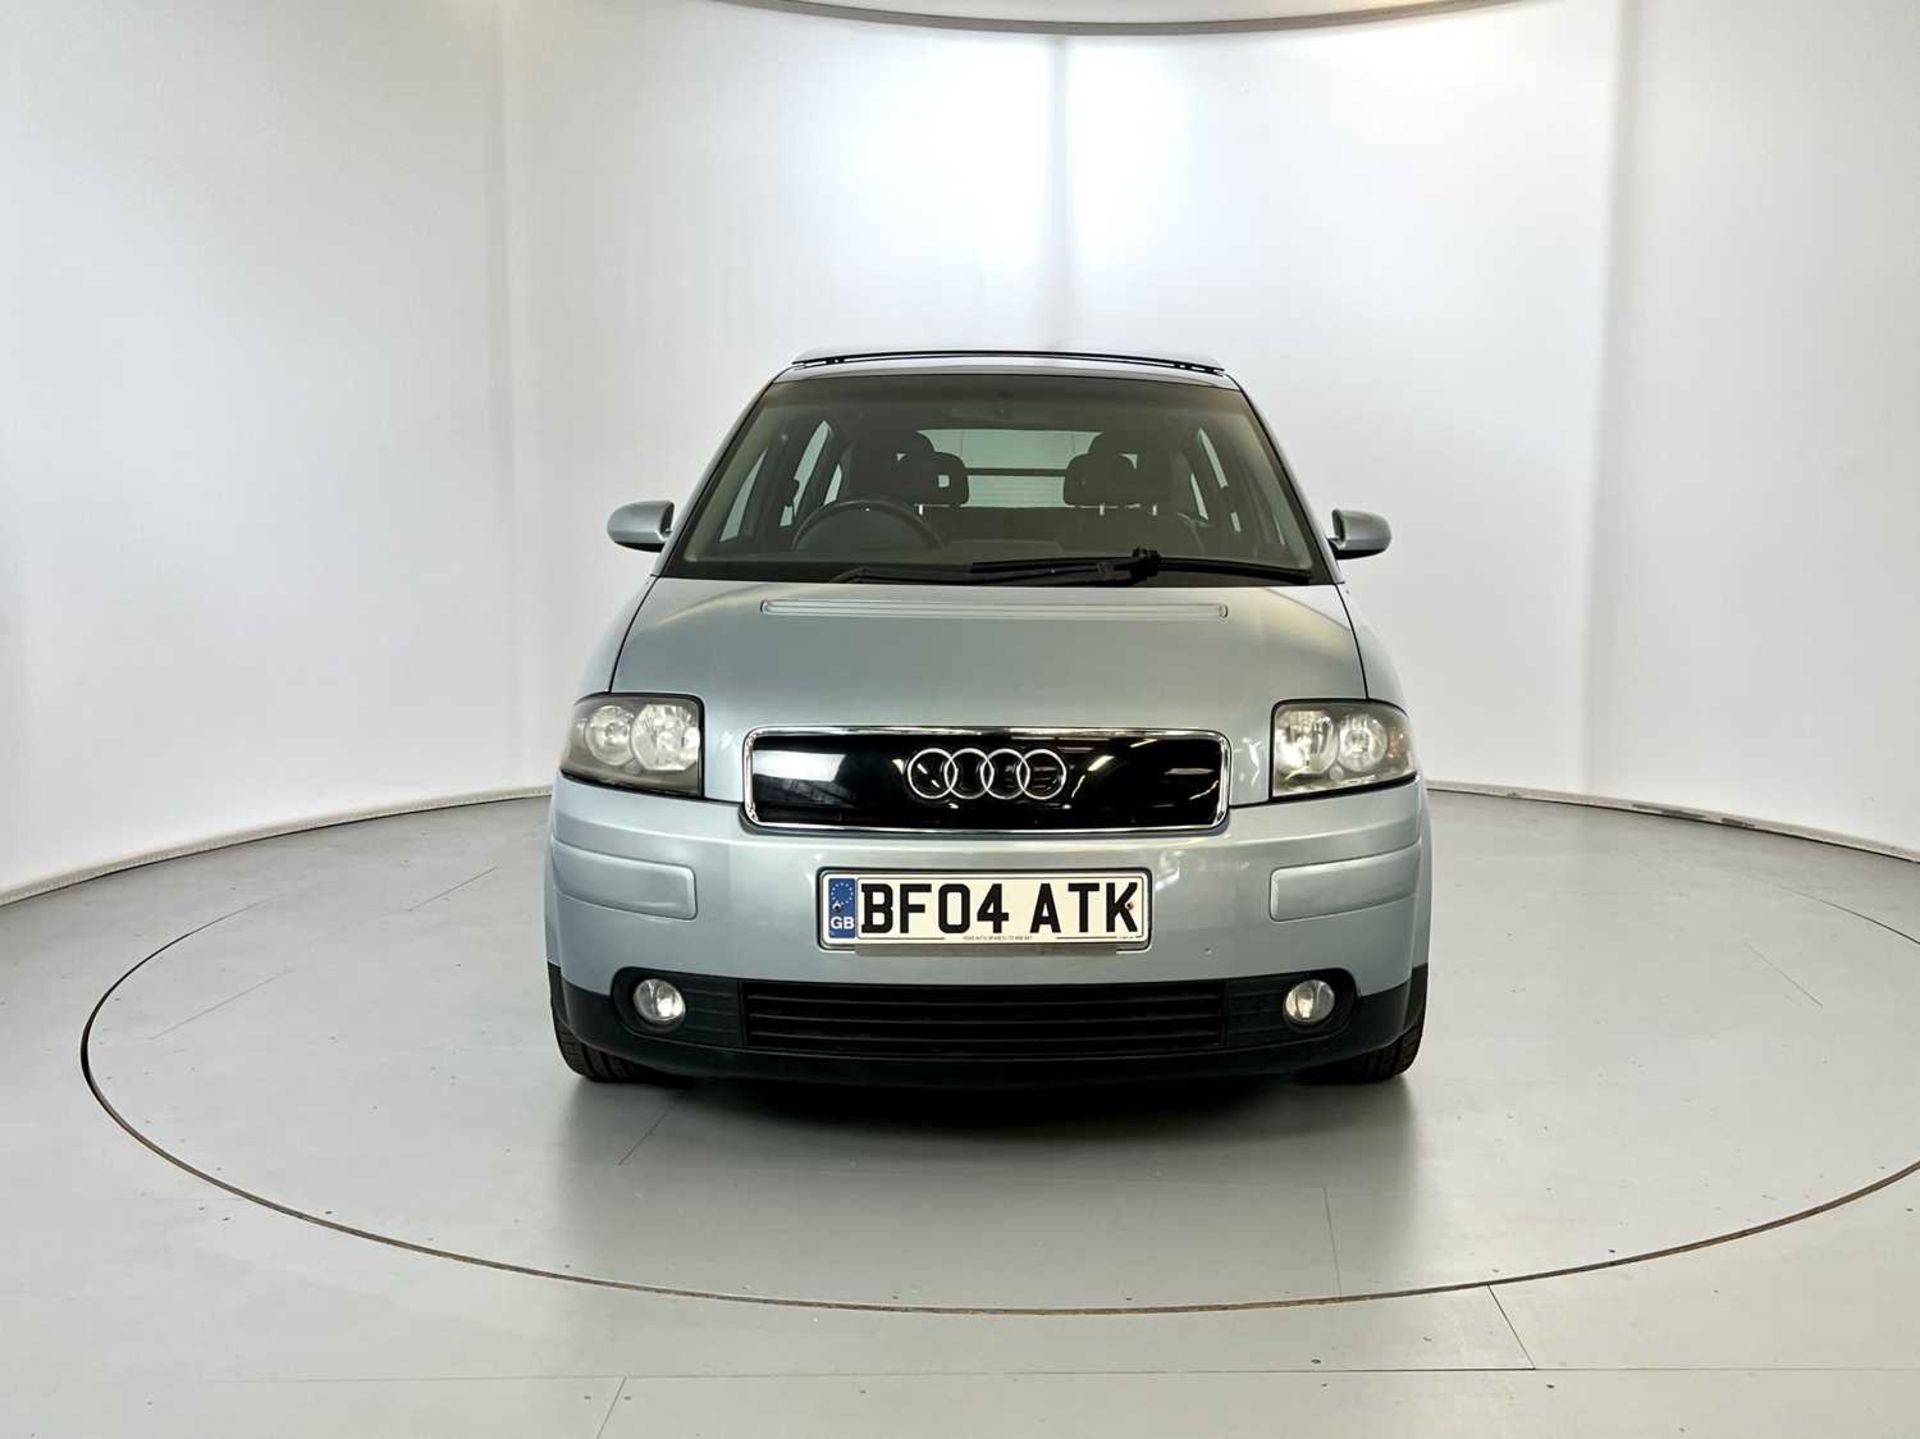 2004 Audi A2 1.6 TFSi - Image 2 of 33